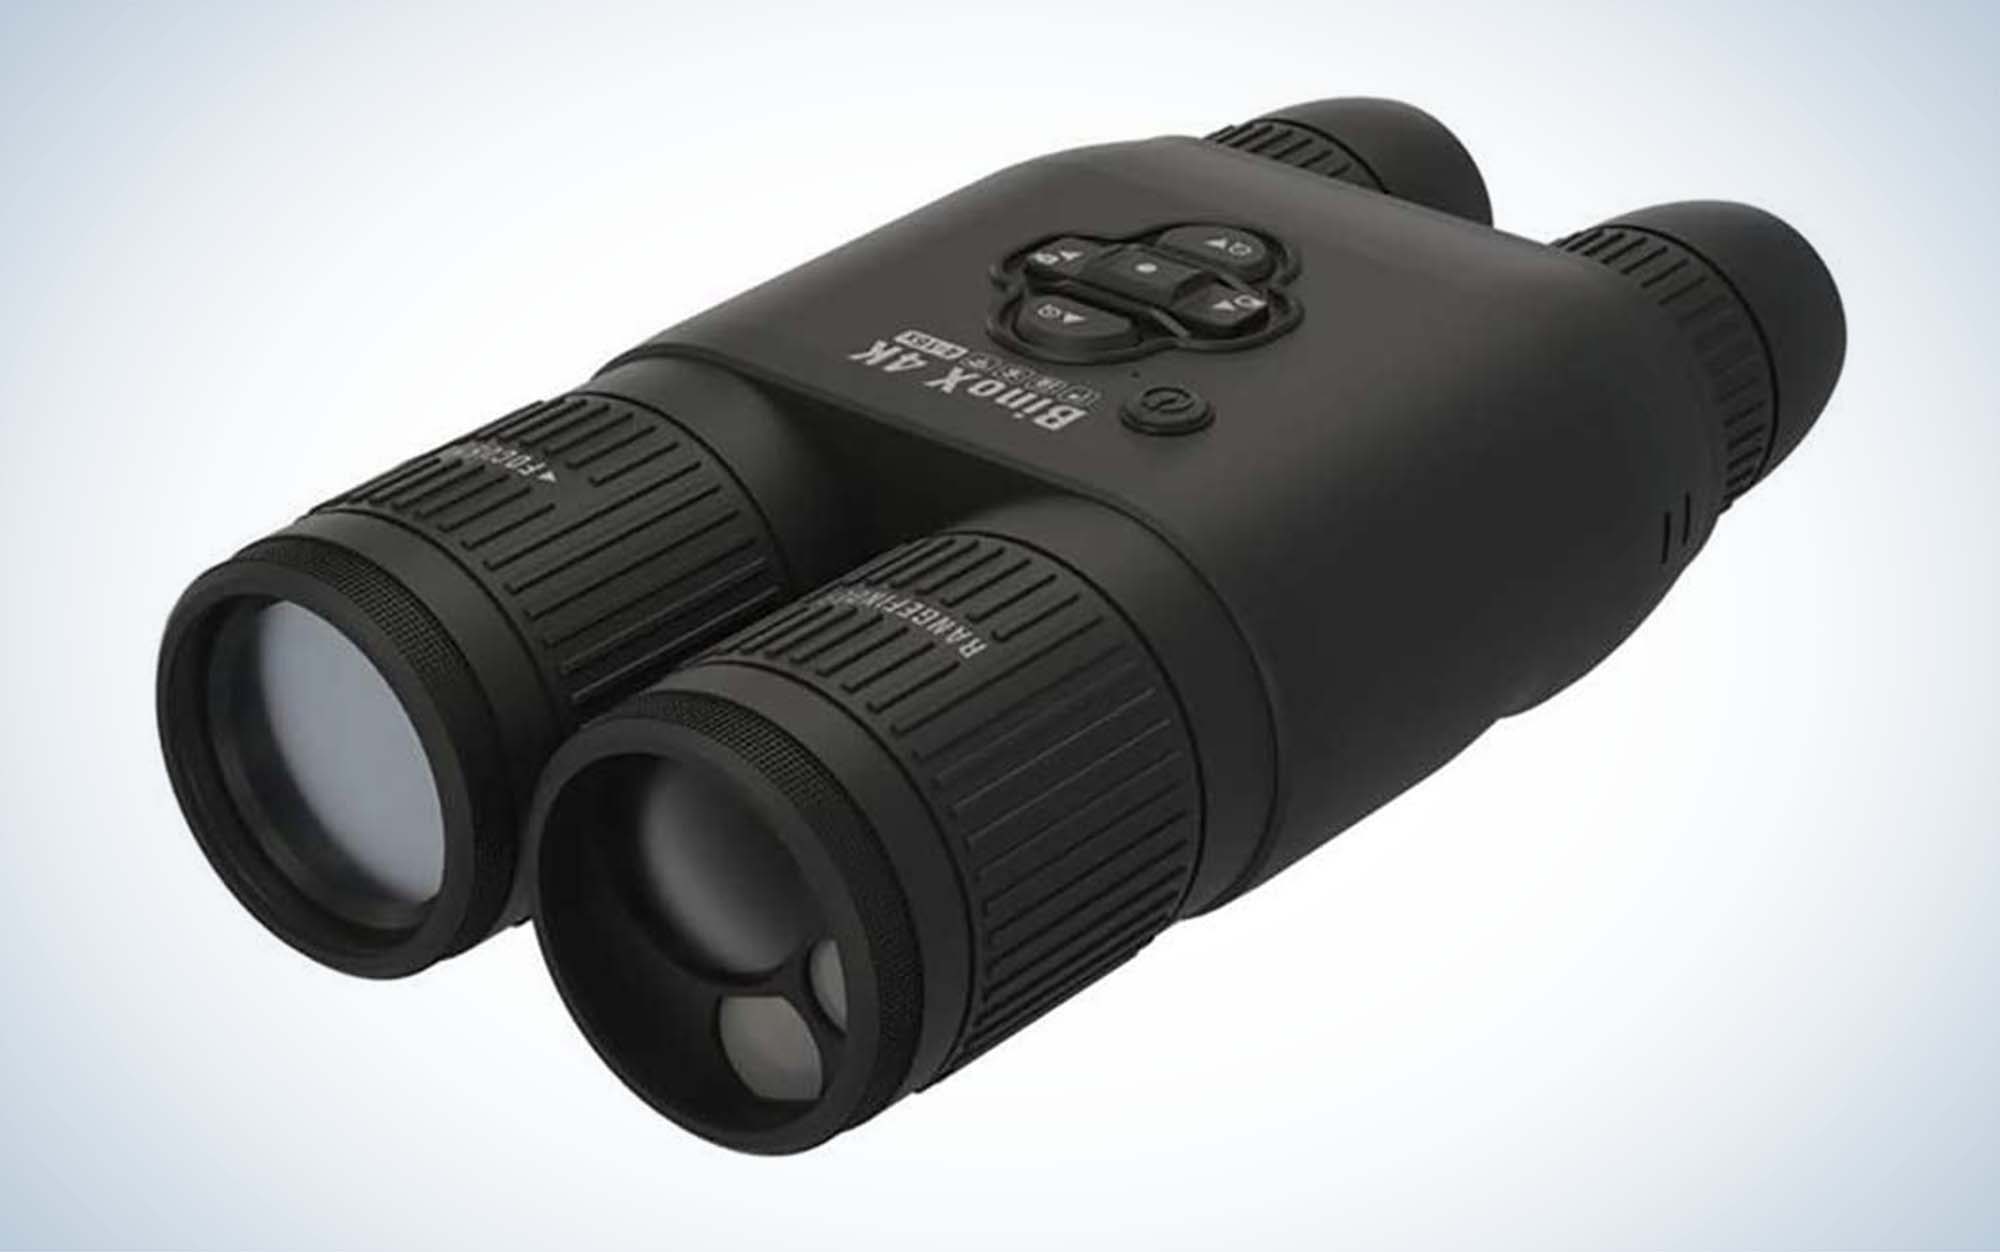 ATN Binox 4K Night Vision Binoculars